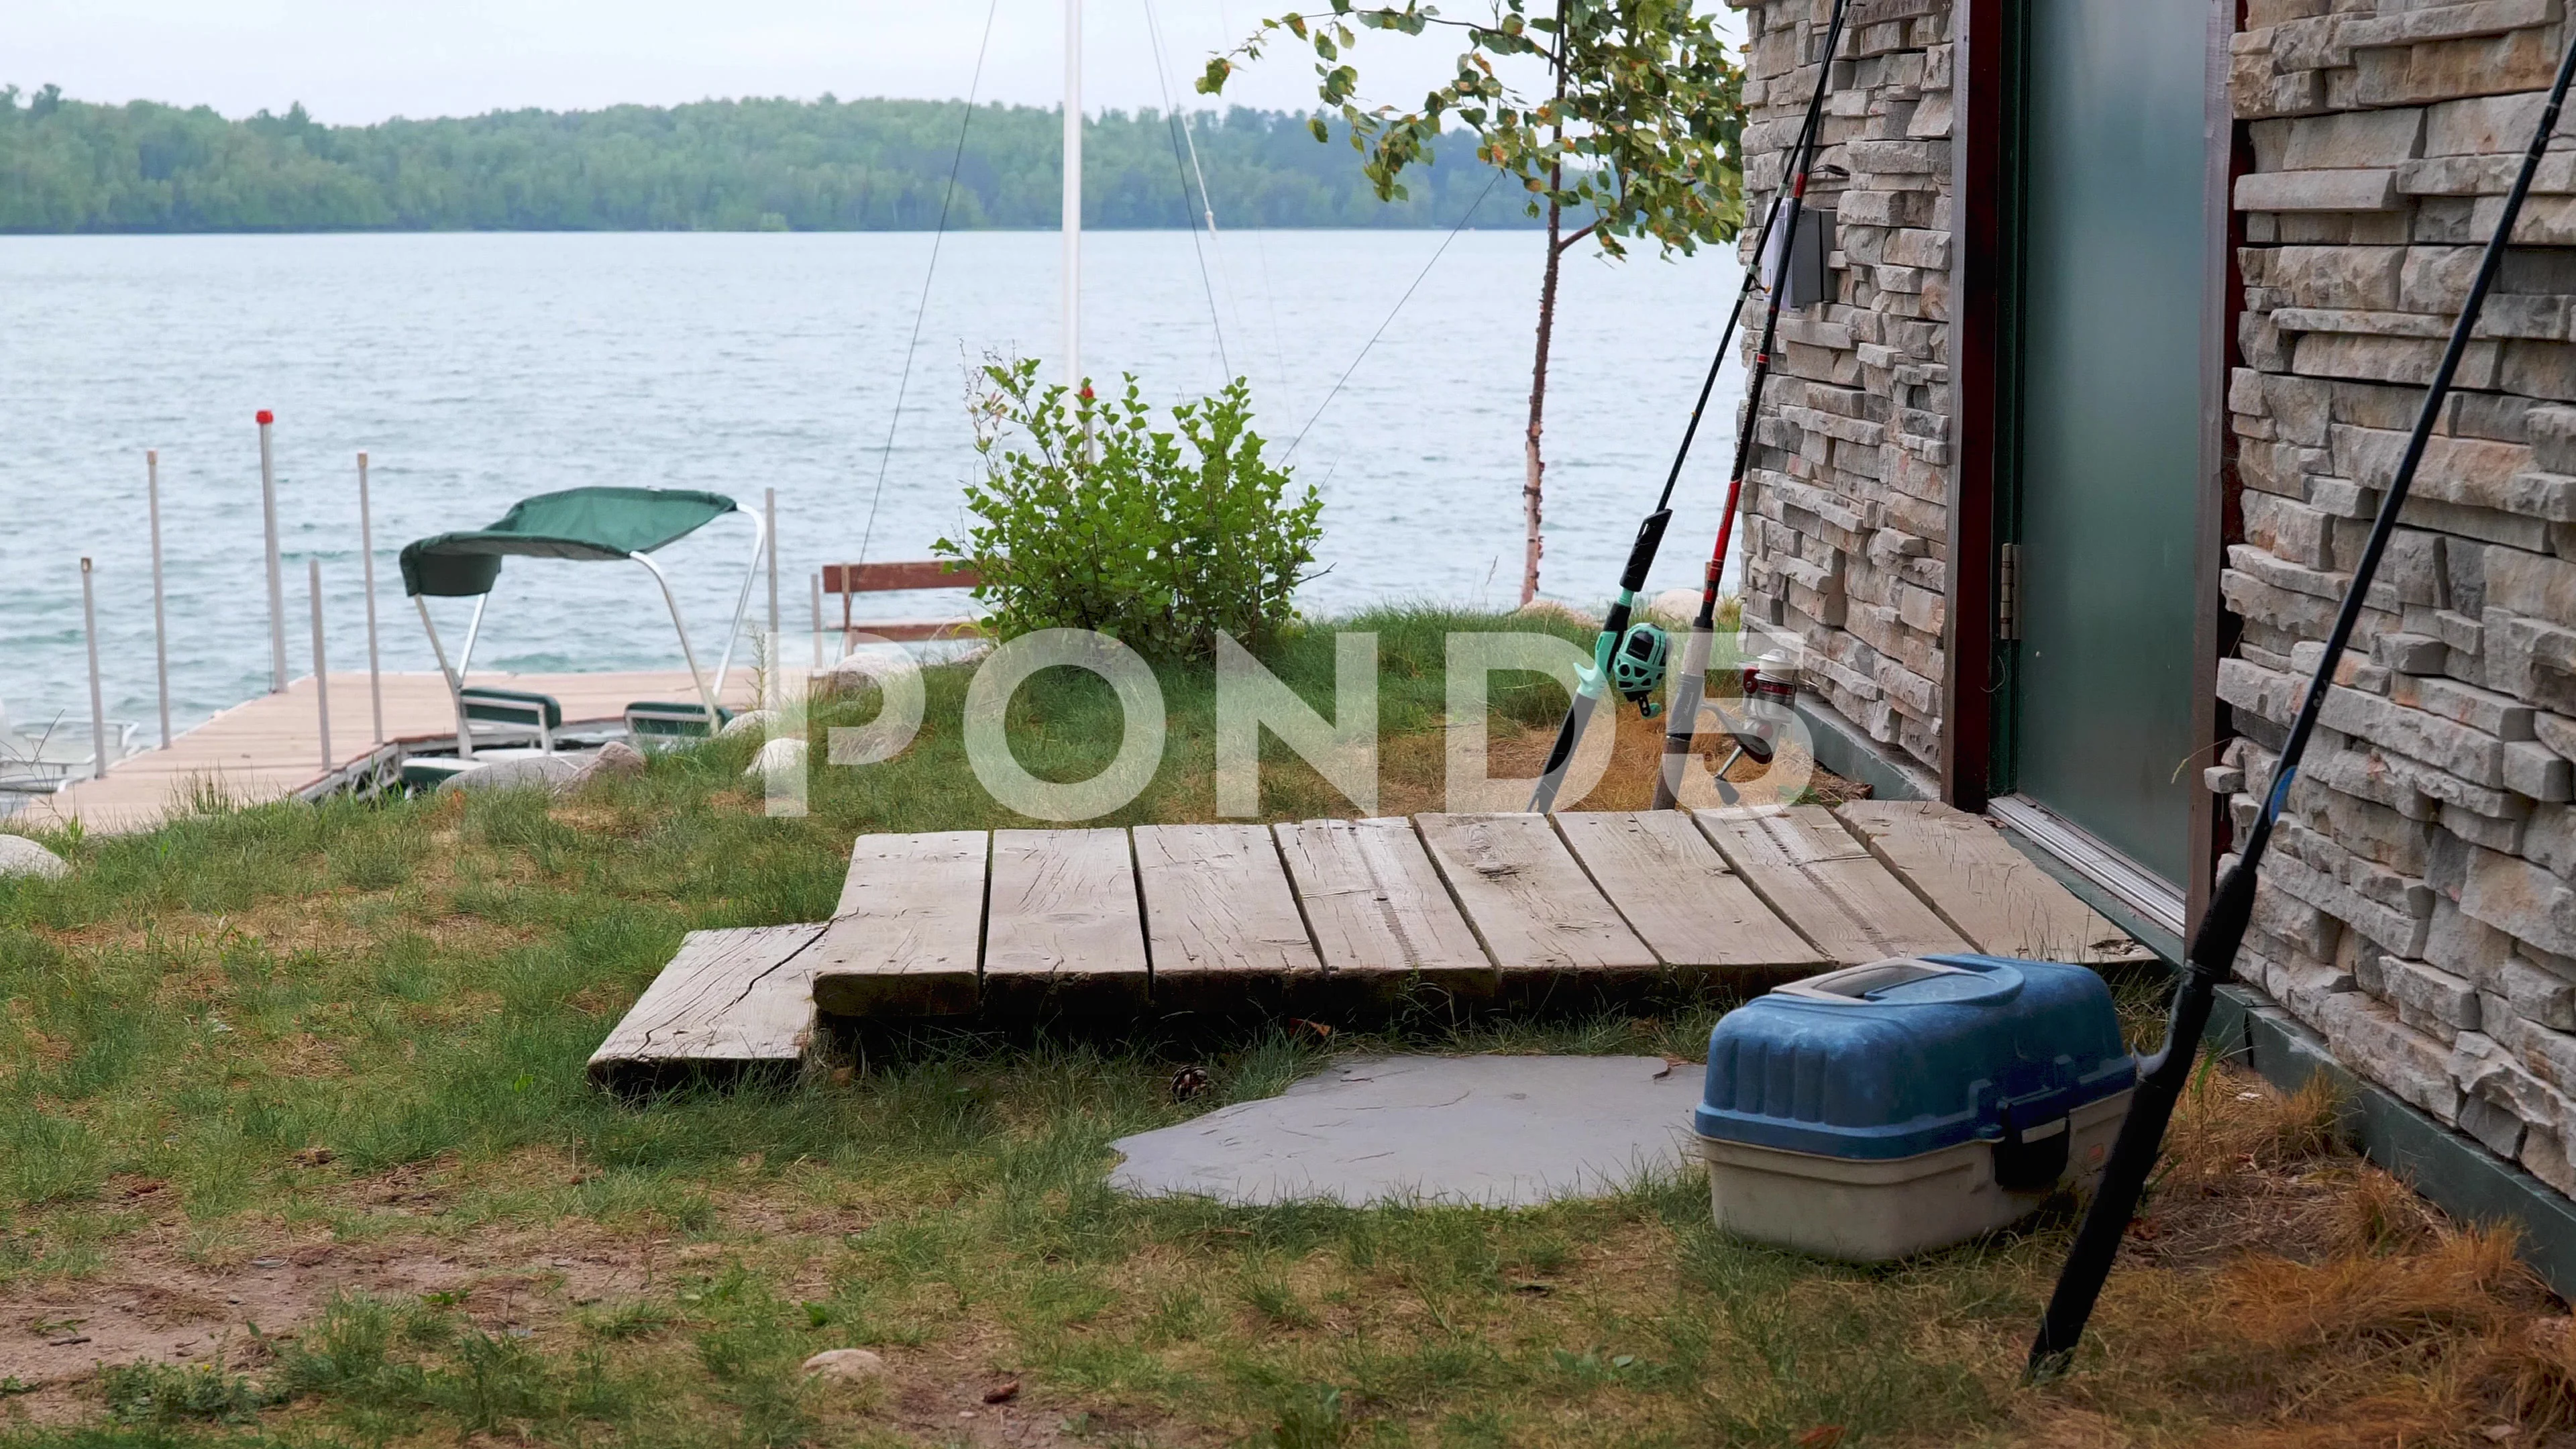 https://images.pond5.com/fishing-rods-lean-against-cabin-160777760_prevstill.jpeg